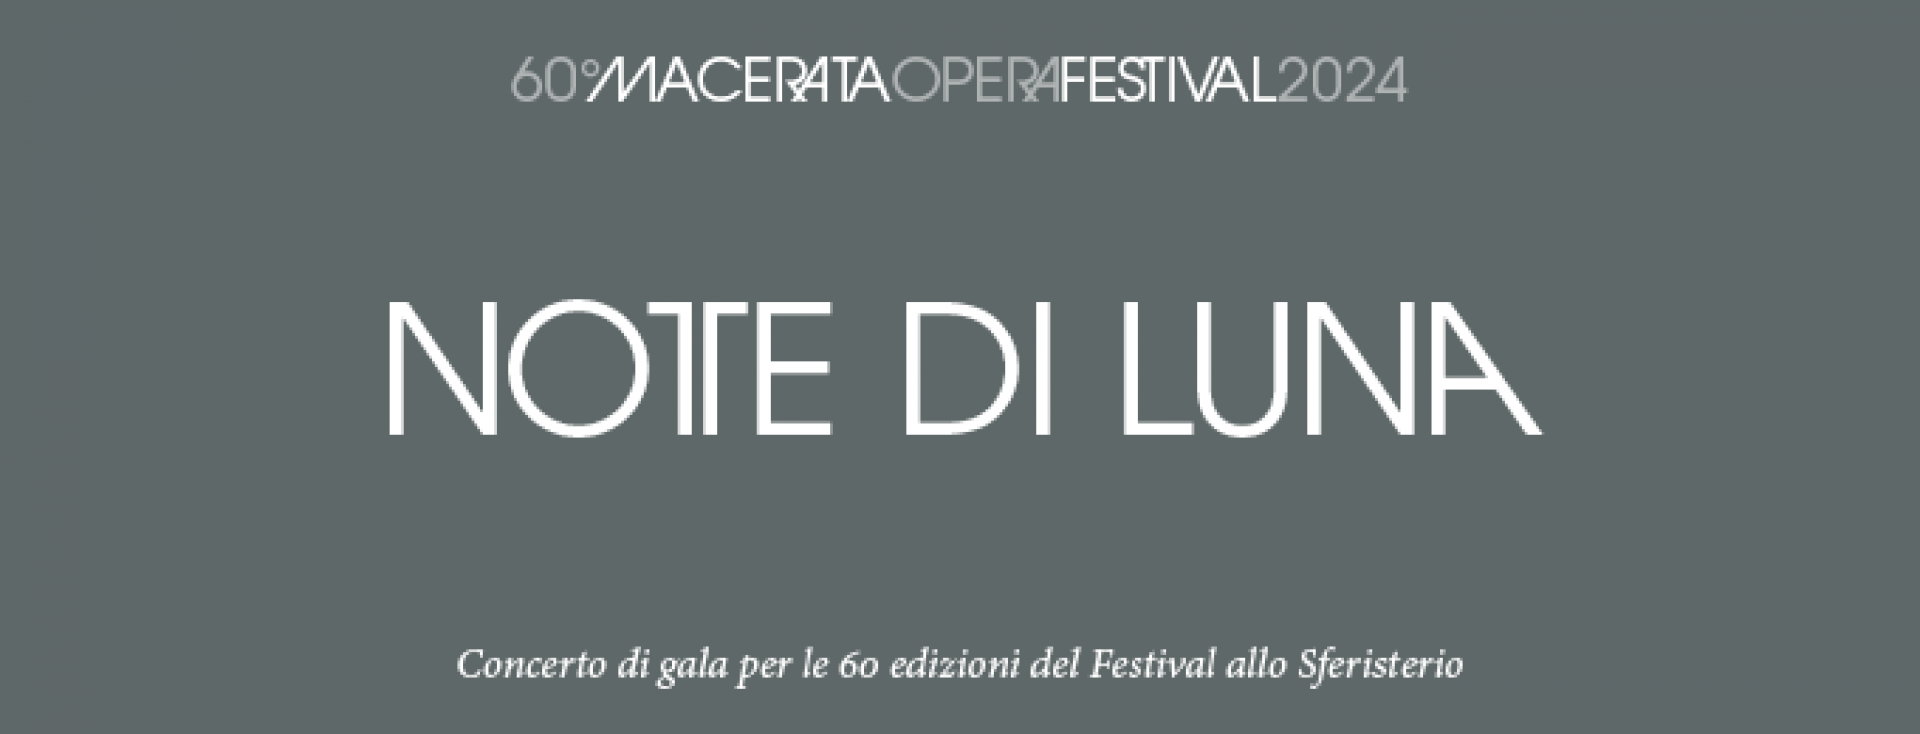 Notte Di Luna -Festival d´Opéra de Macerata 2024